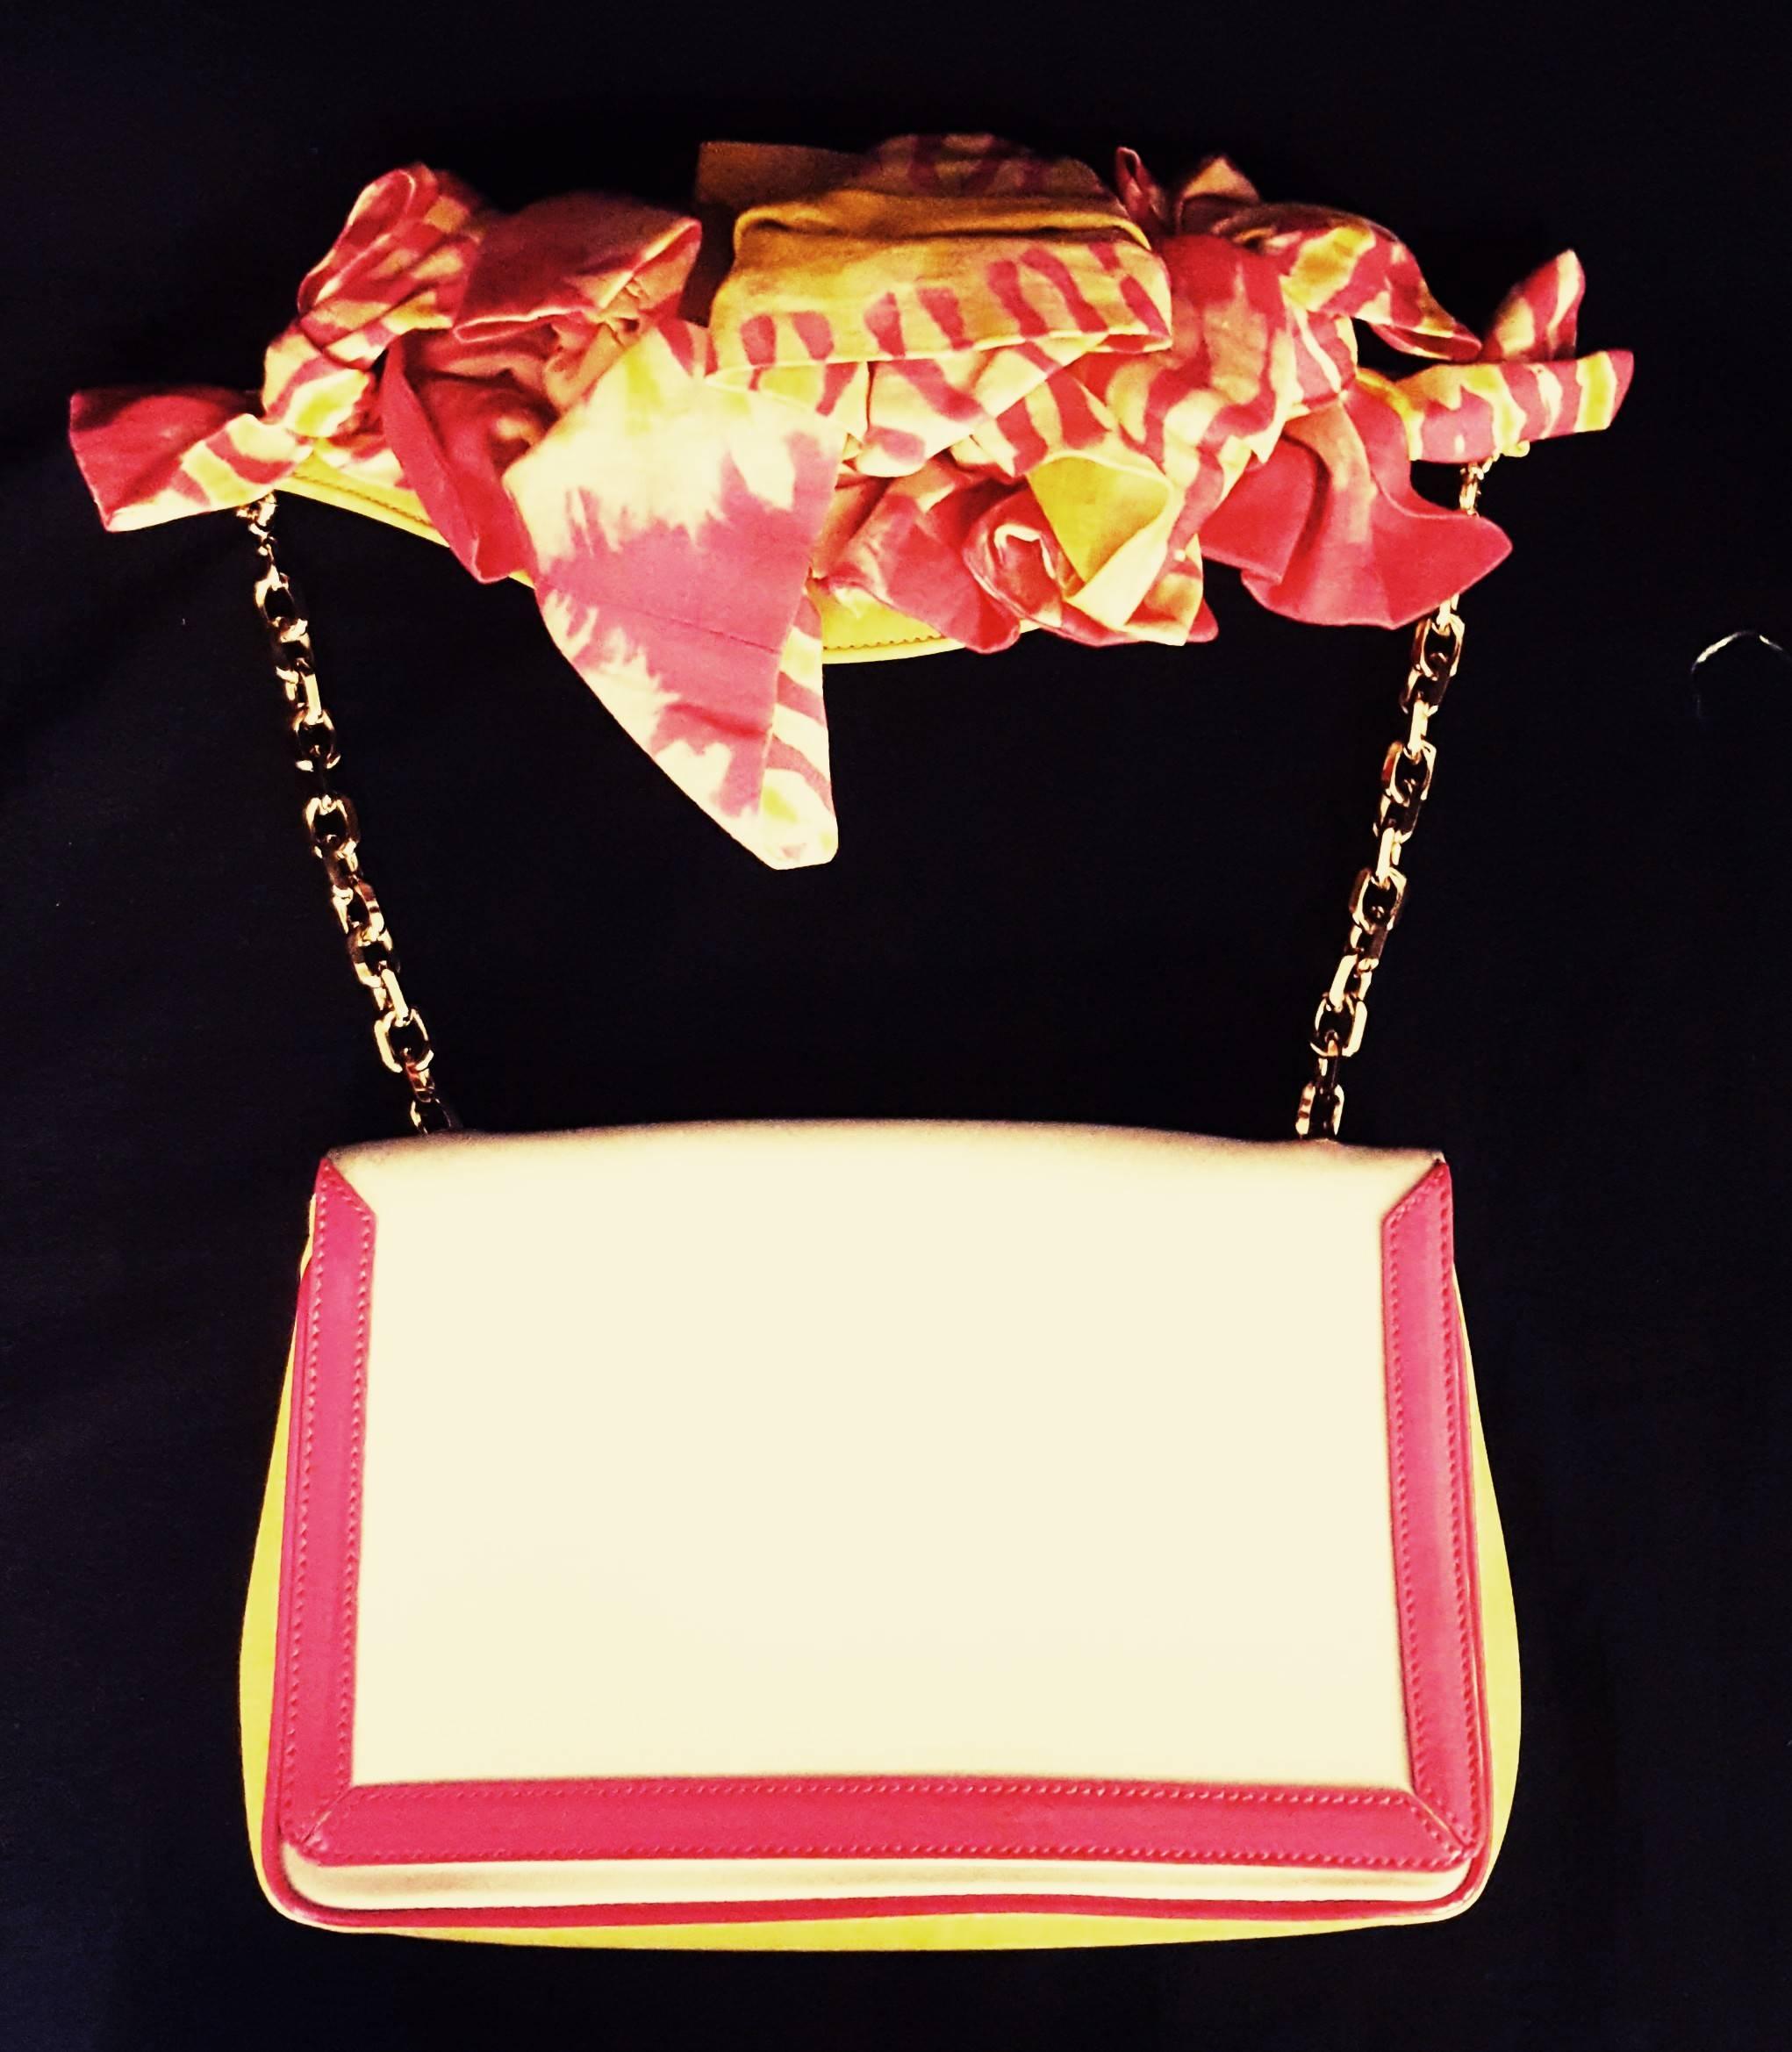 Christian Louboutin Artemis Papillote Hot Pink & Yellow Top Strap w/ Bows Bag 1